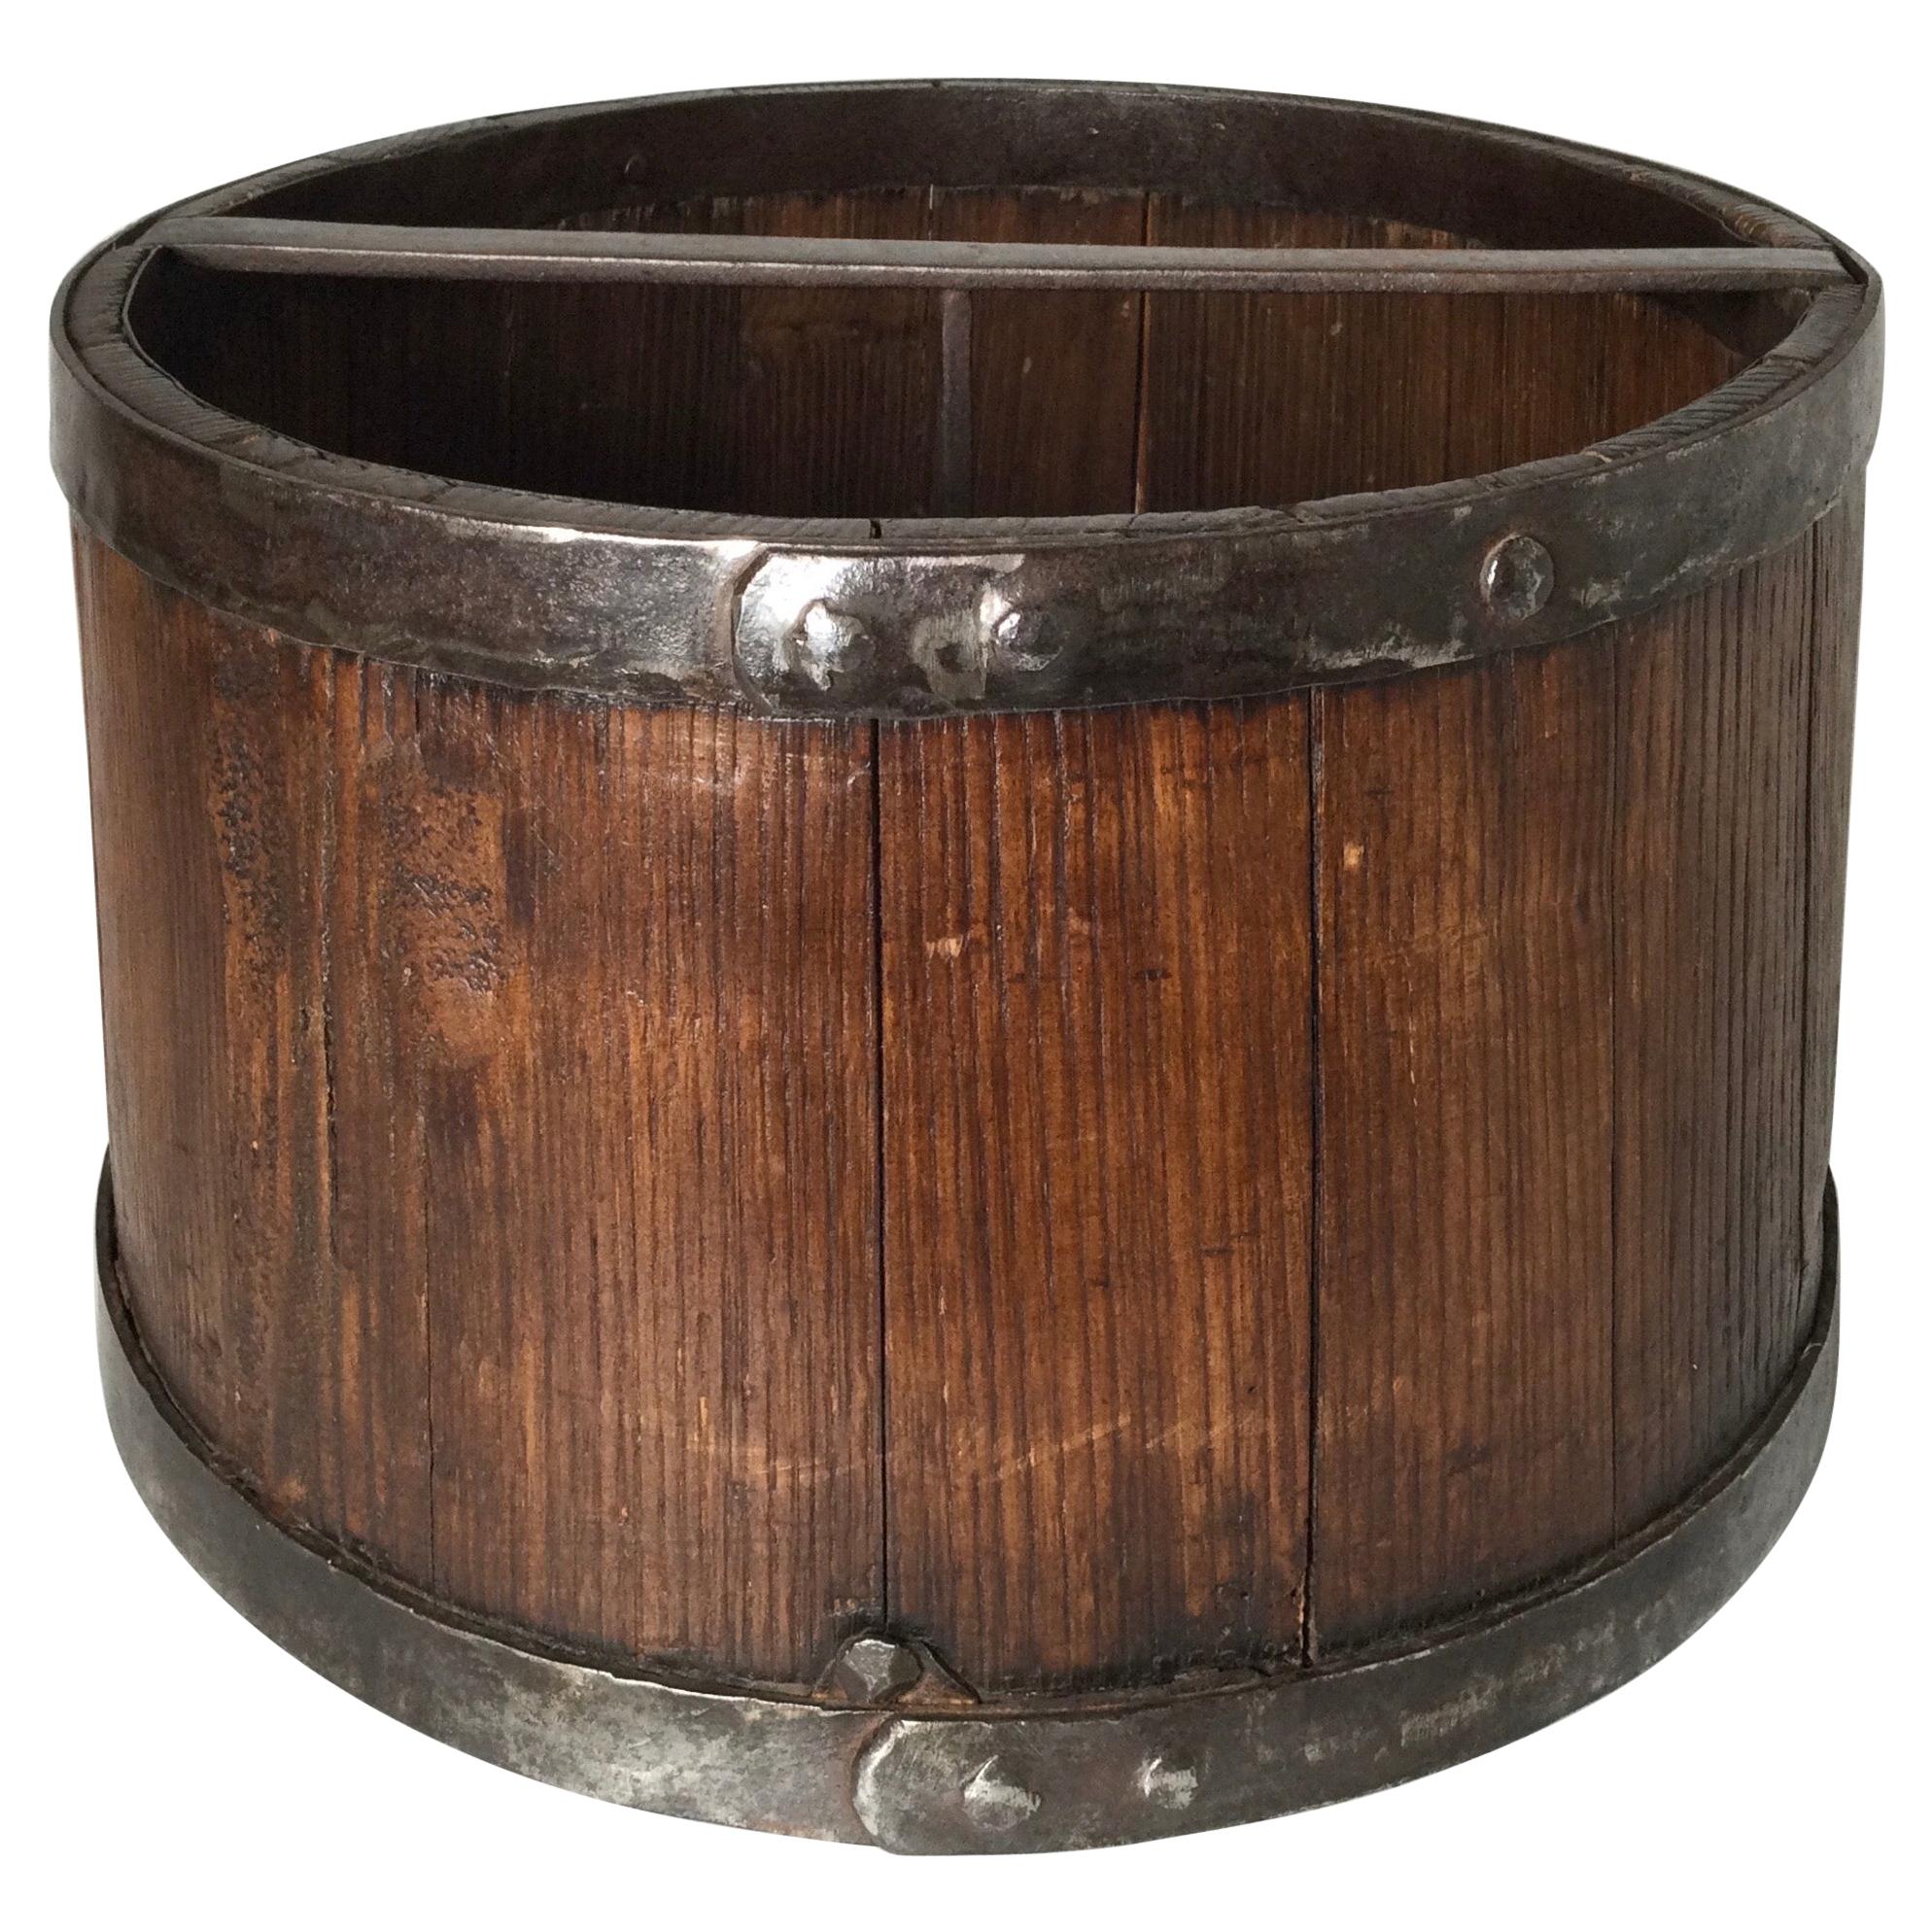 Large Rustic French Wood Grain Measurer Bucket, Pot